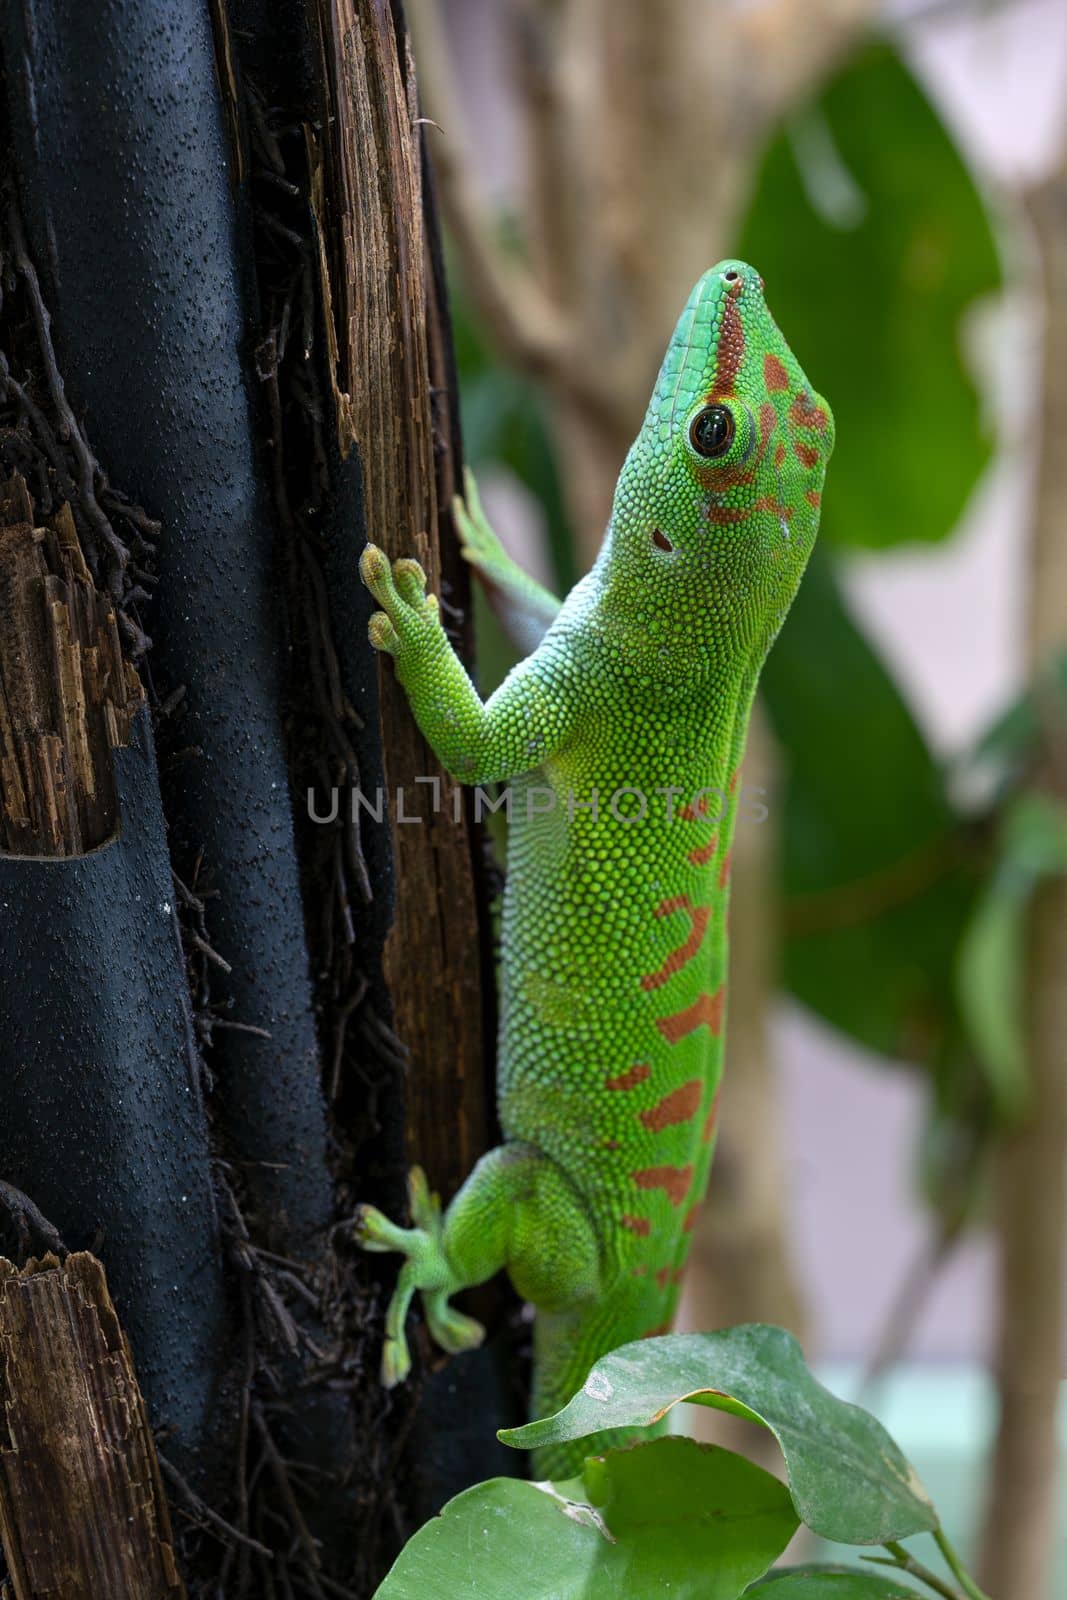 Madagascar giant day gecko, Phelsuma madagascariensis by alfotokunst